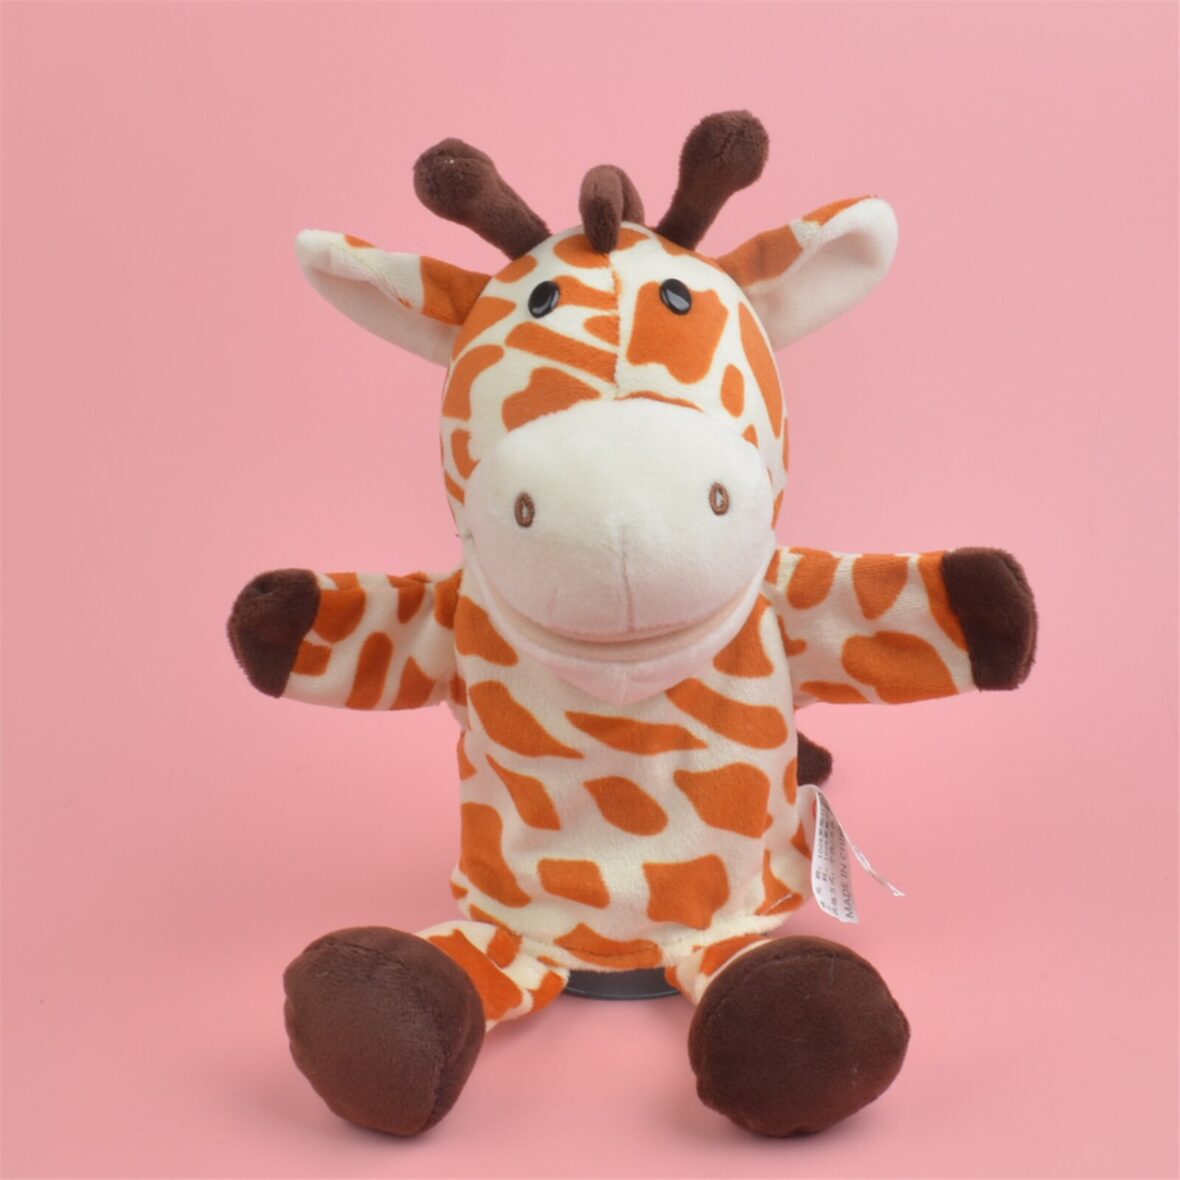 25-30cm Giraffee Soft Stuffed Plush Toy